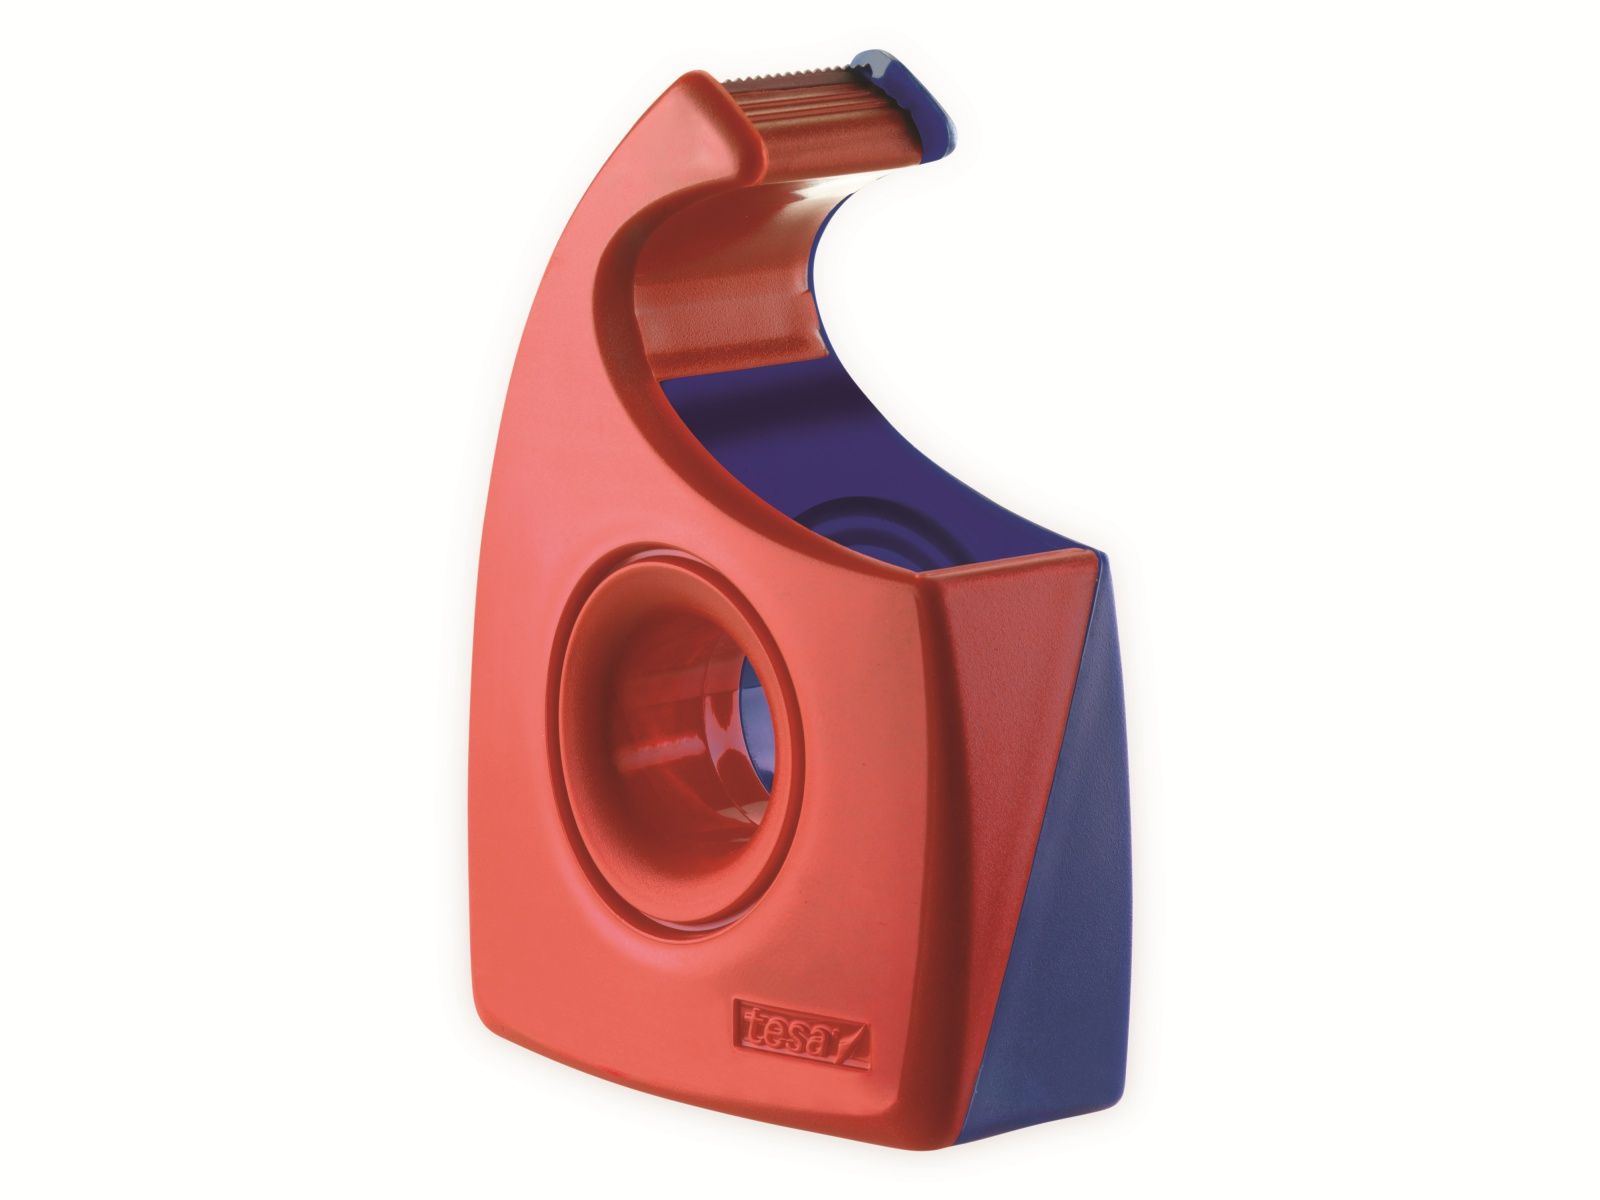 TESA ® Easy Cut Handabroller 33:19 rot-blau, leer, bis 33m:19mm, 57444-00001-01 von Tesa